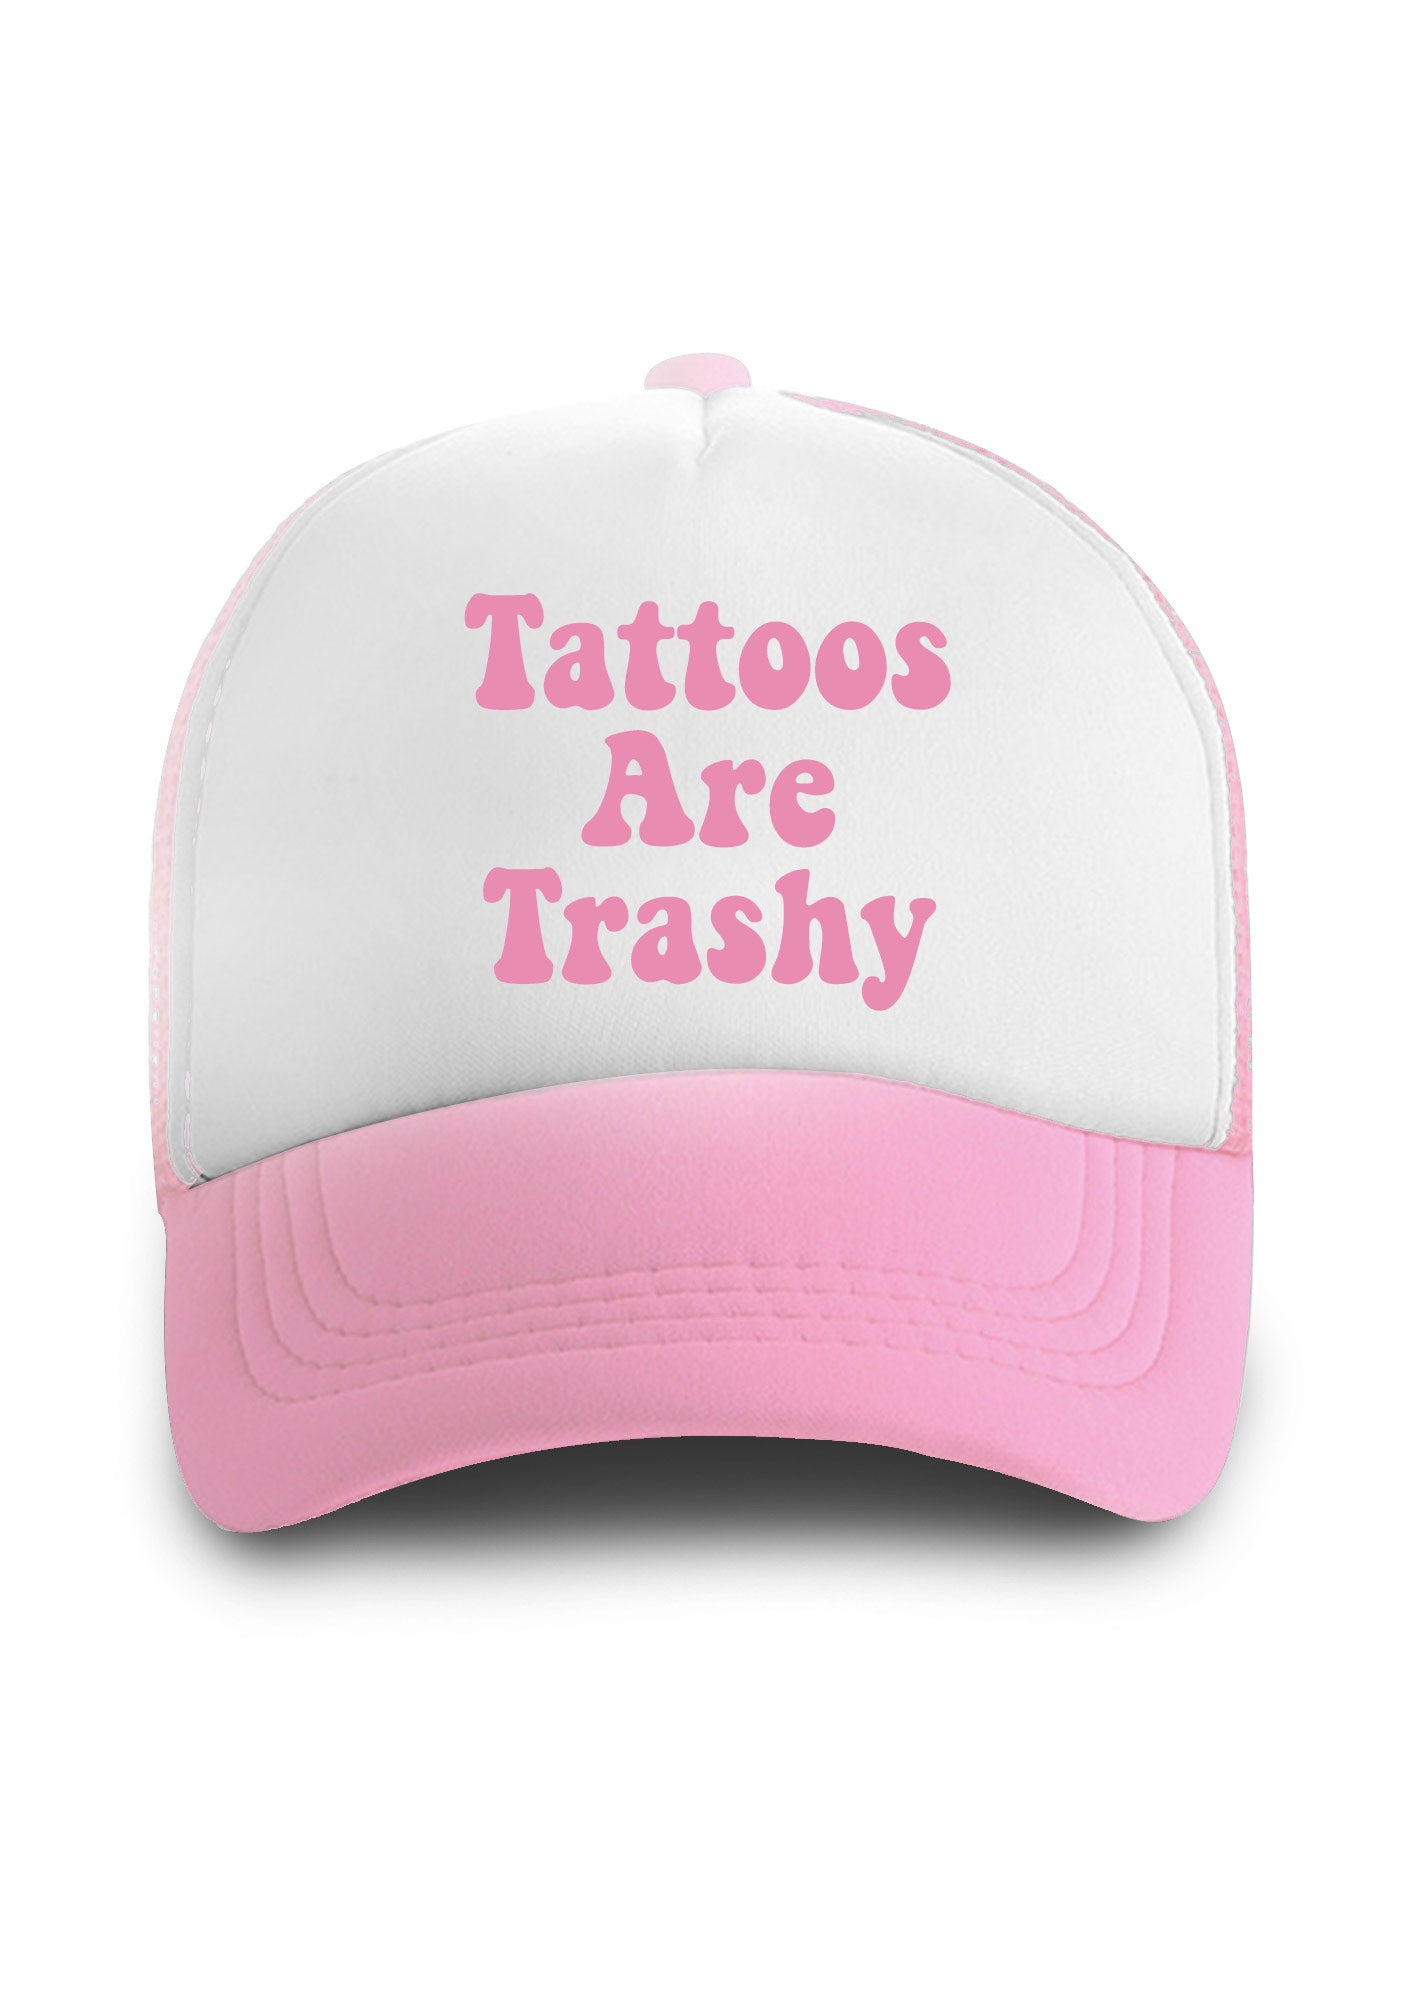 Tattoos Are Trashy Trucker Hat